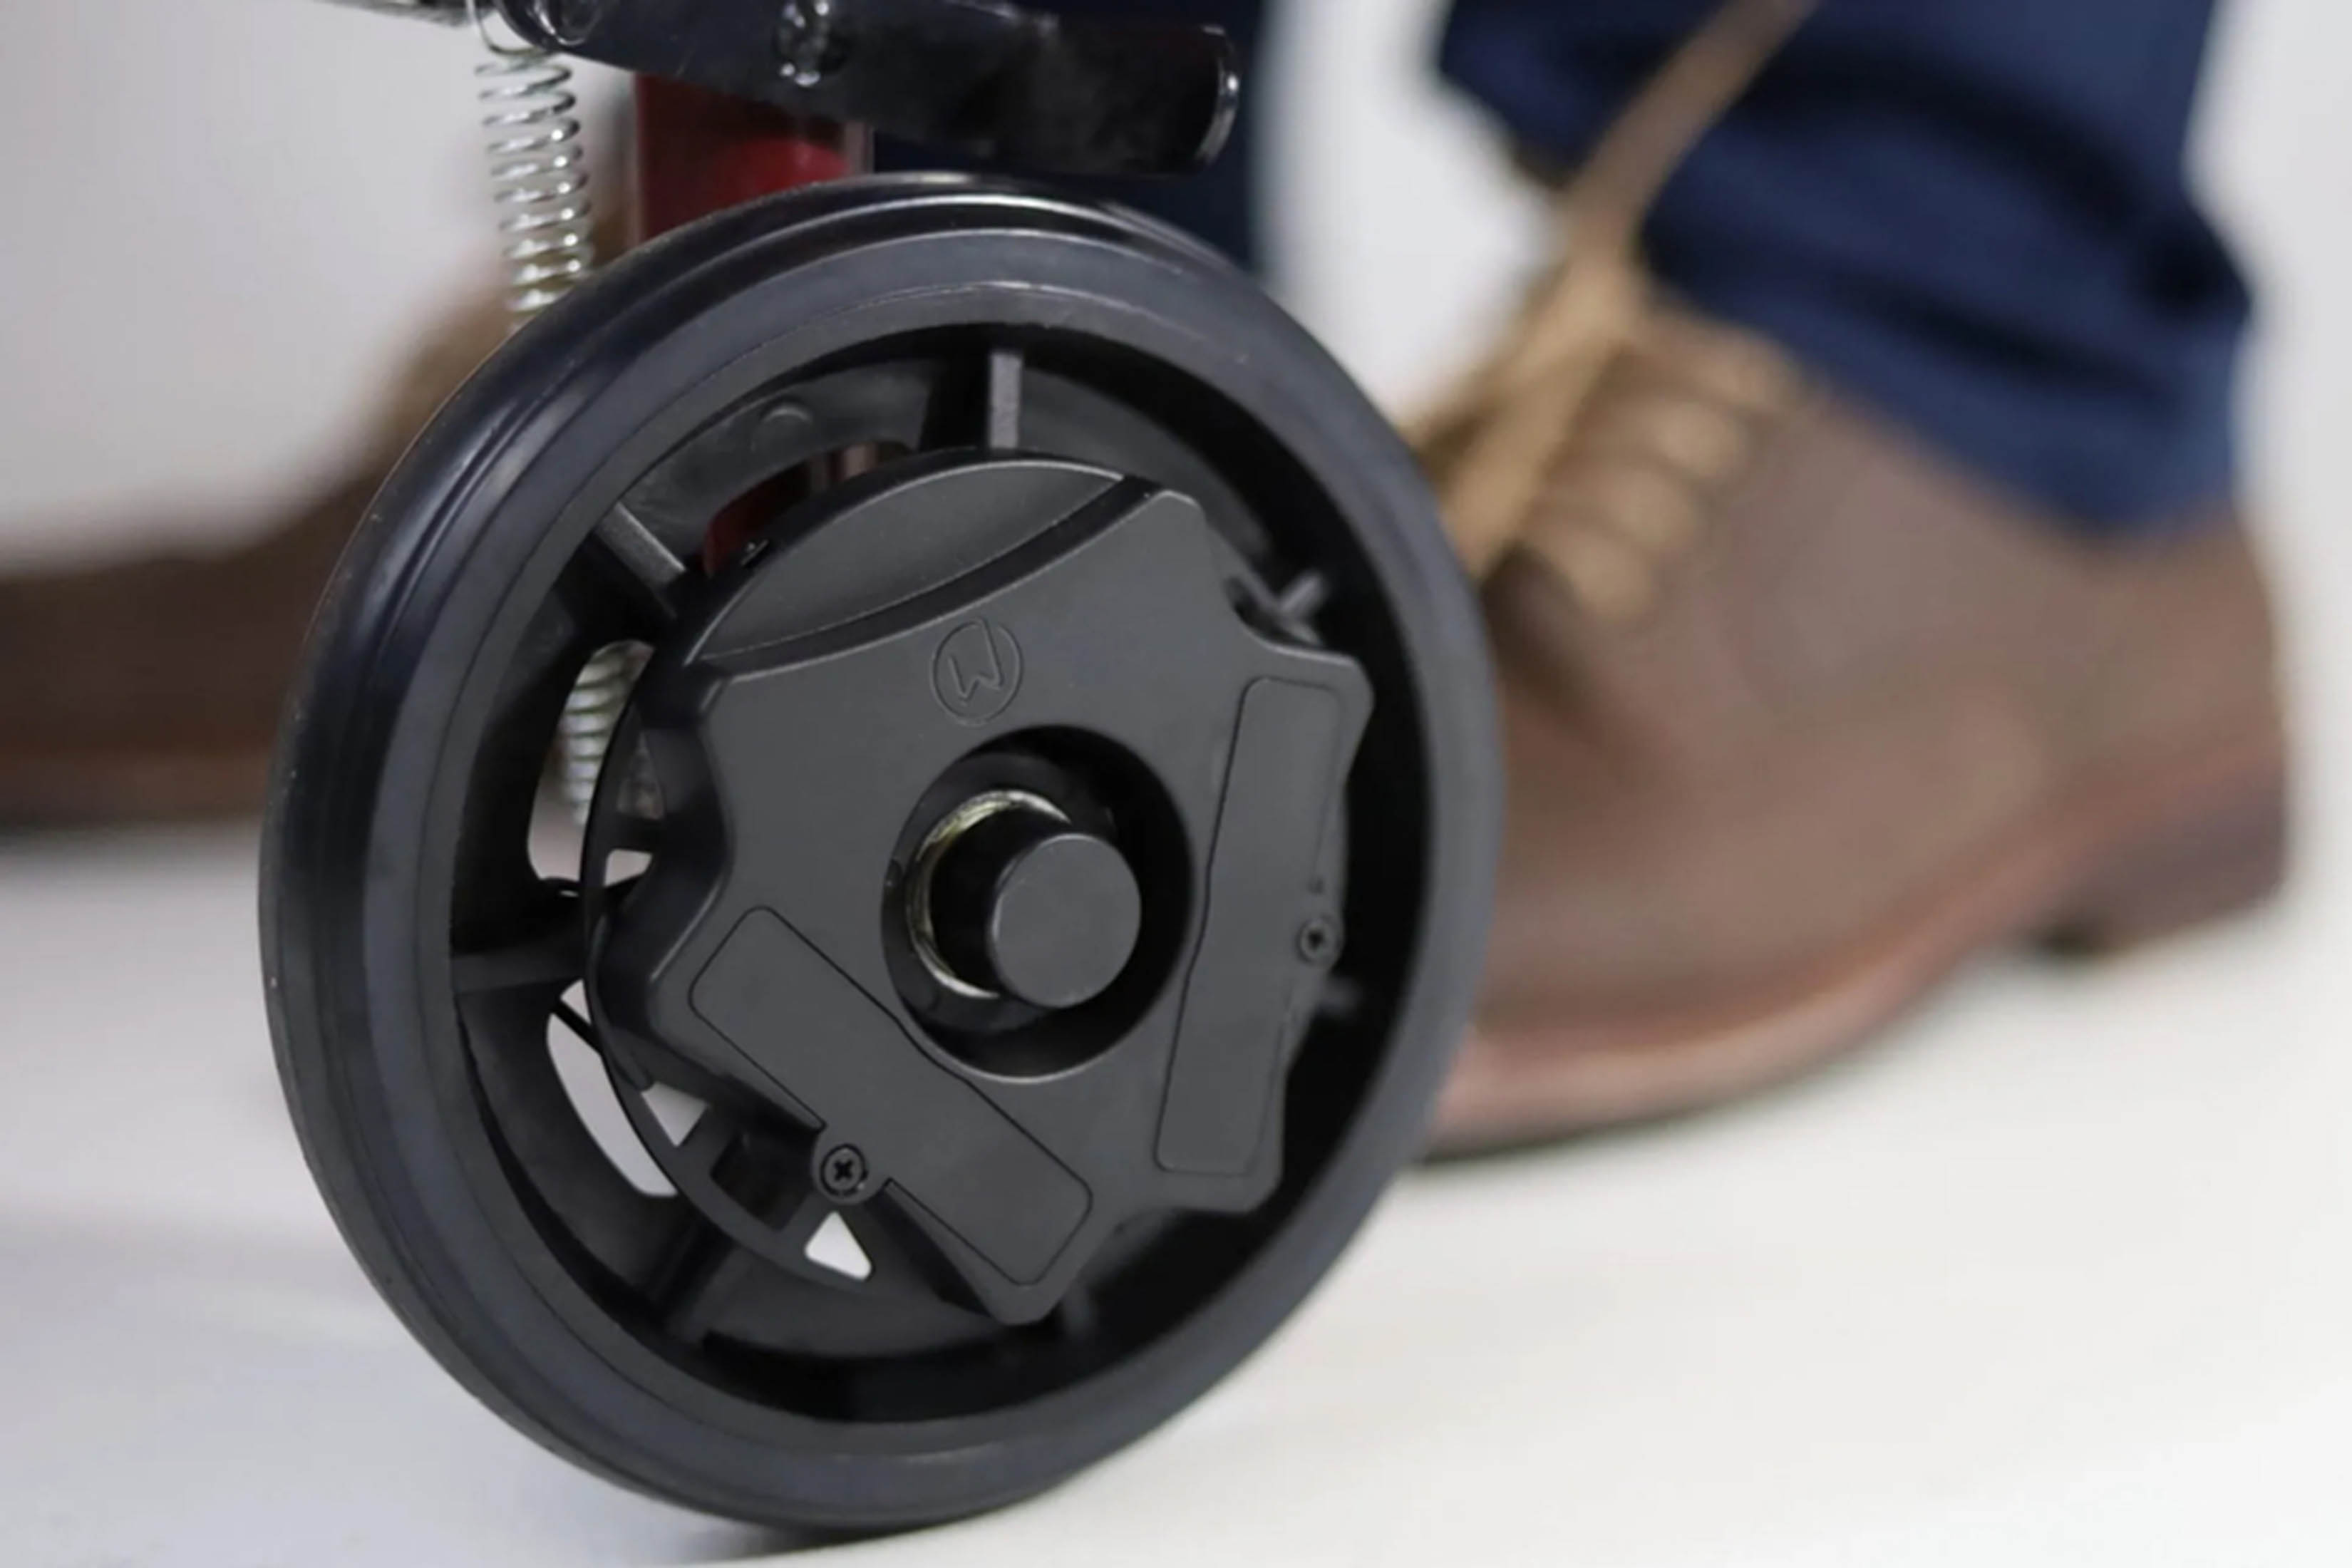 Closeup of WalkWise device, black circular attachment to a wheel